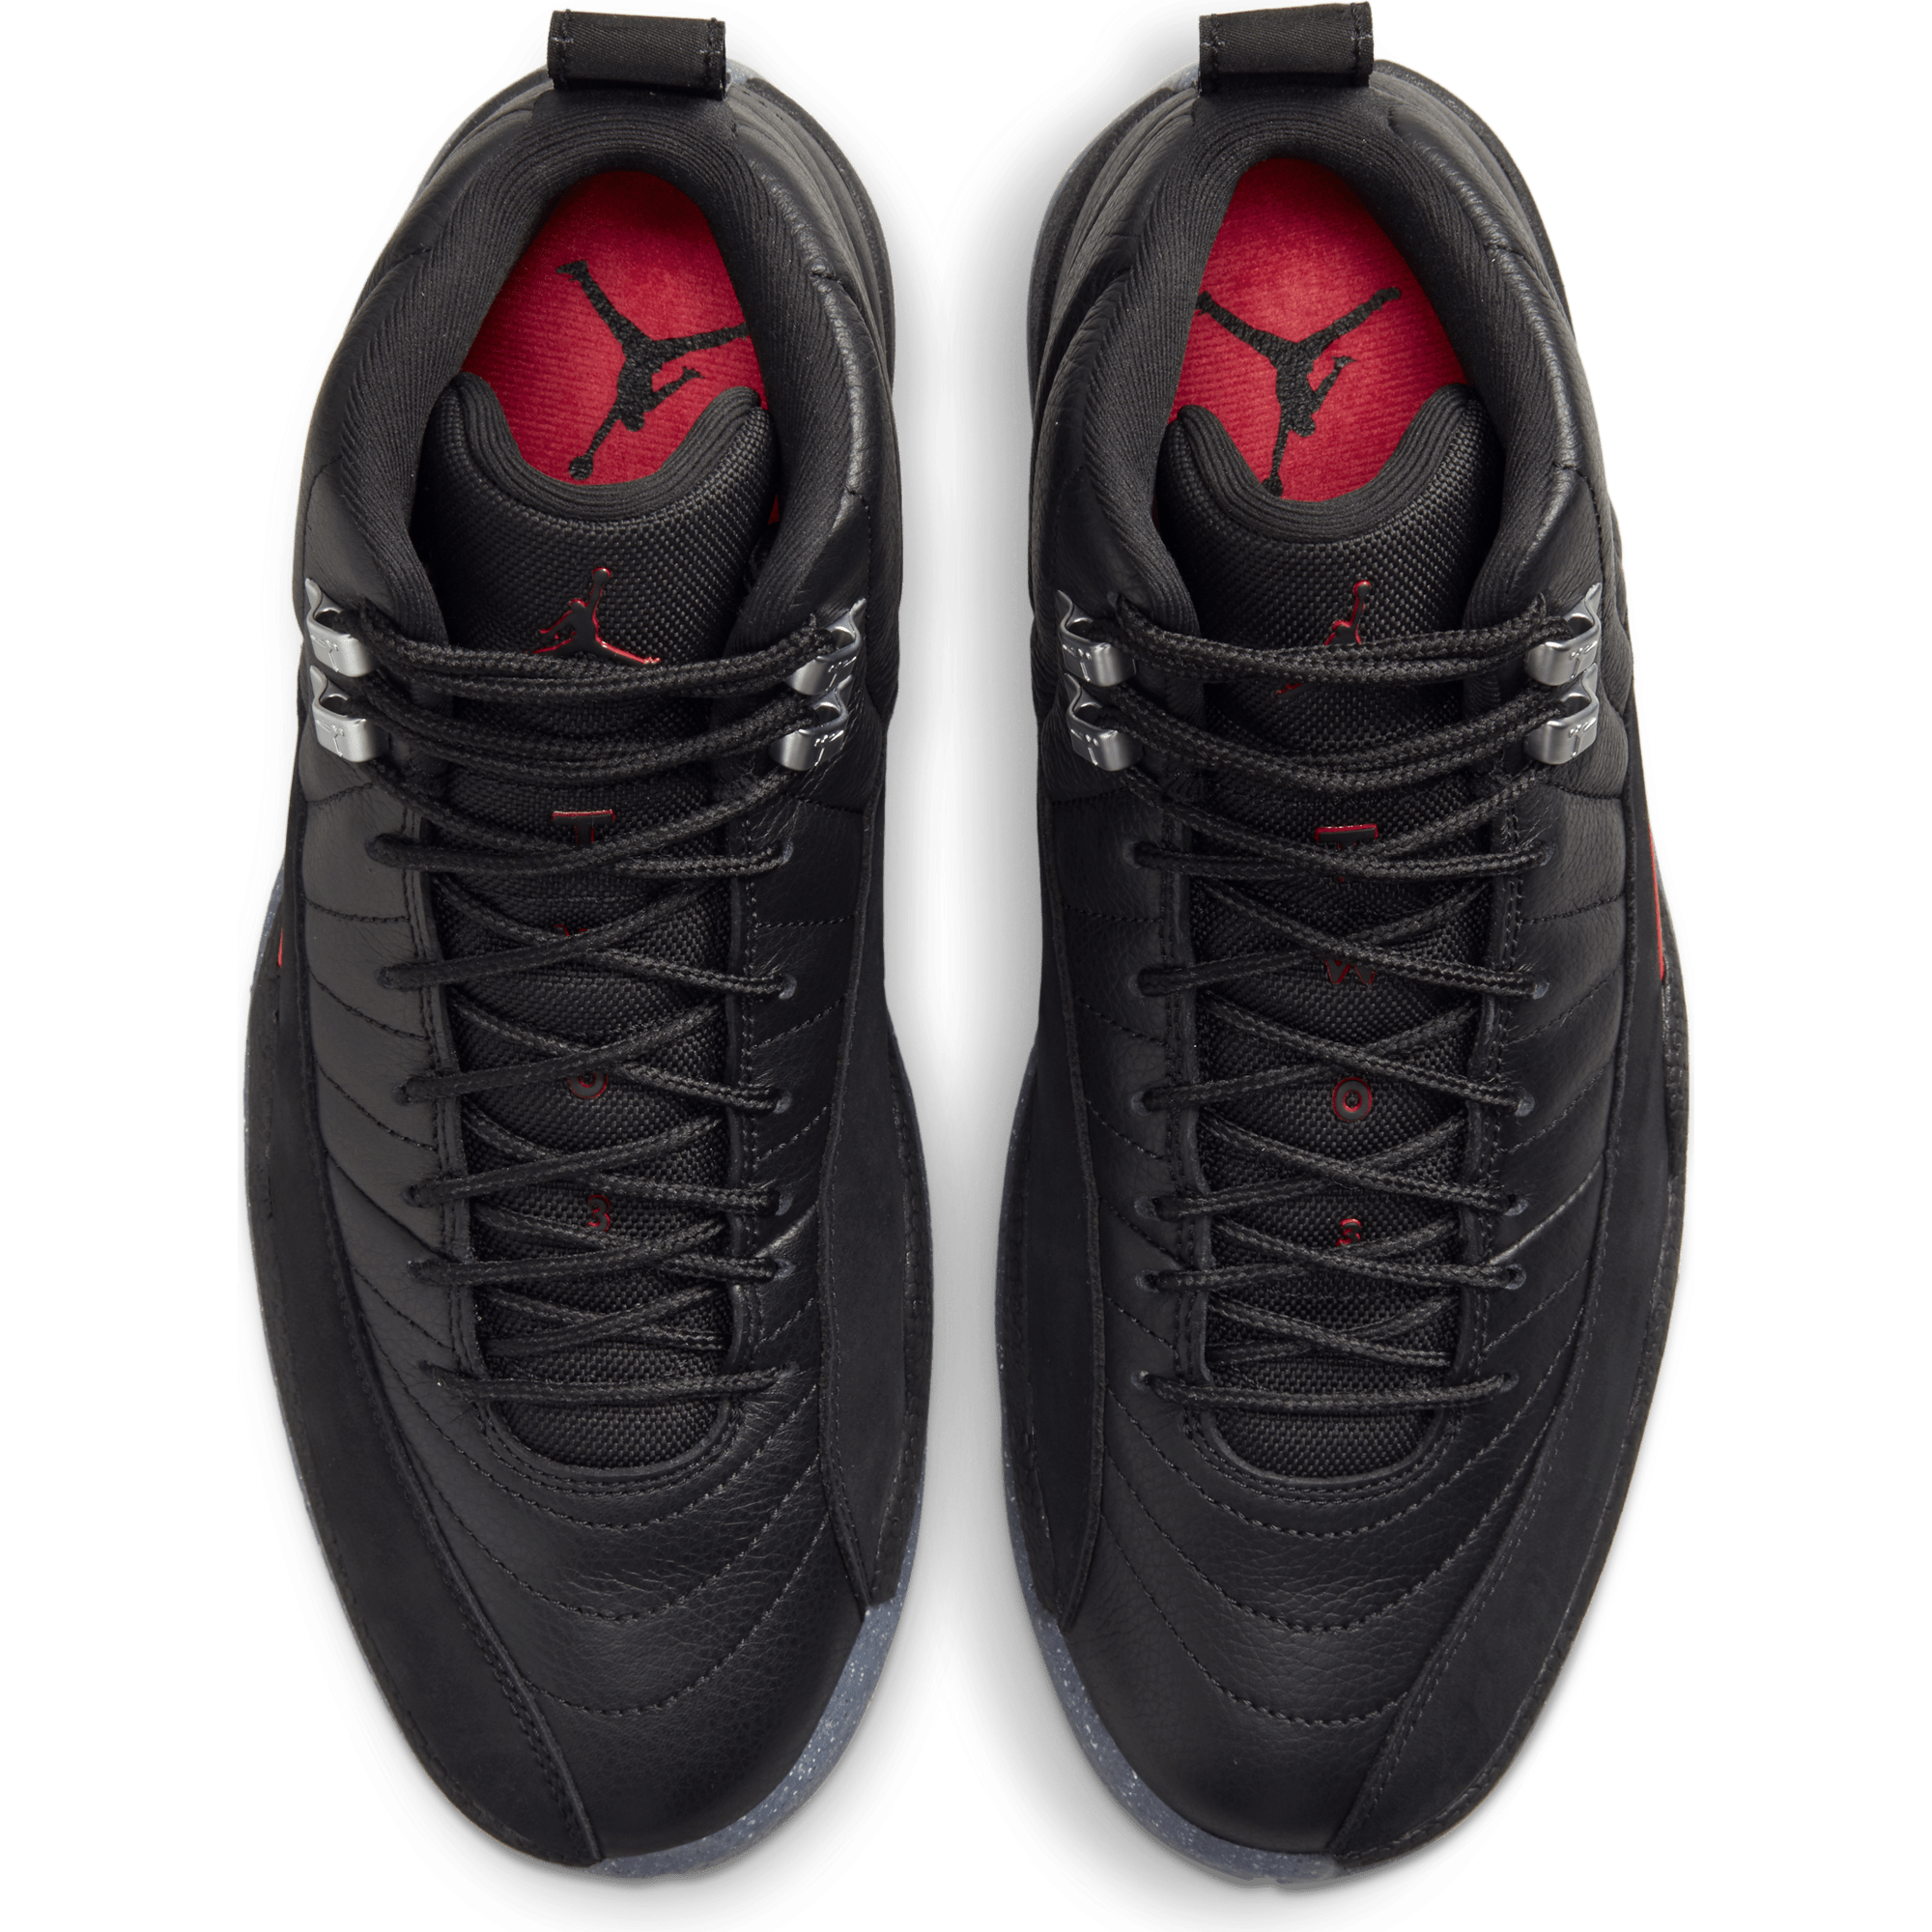 Air Jordan Footwear Air Jordan 12 Retro - Men's